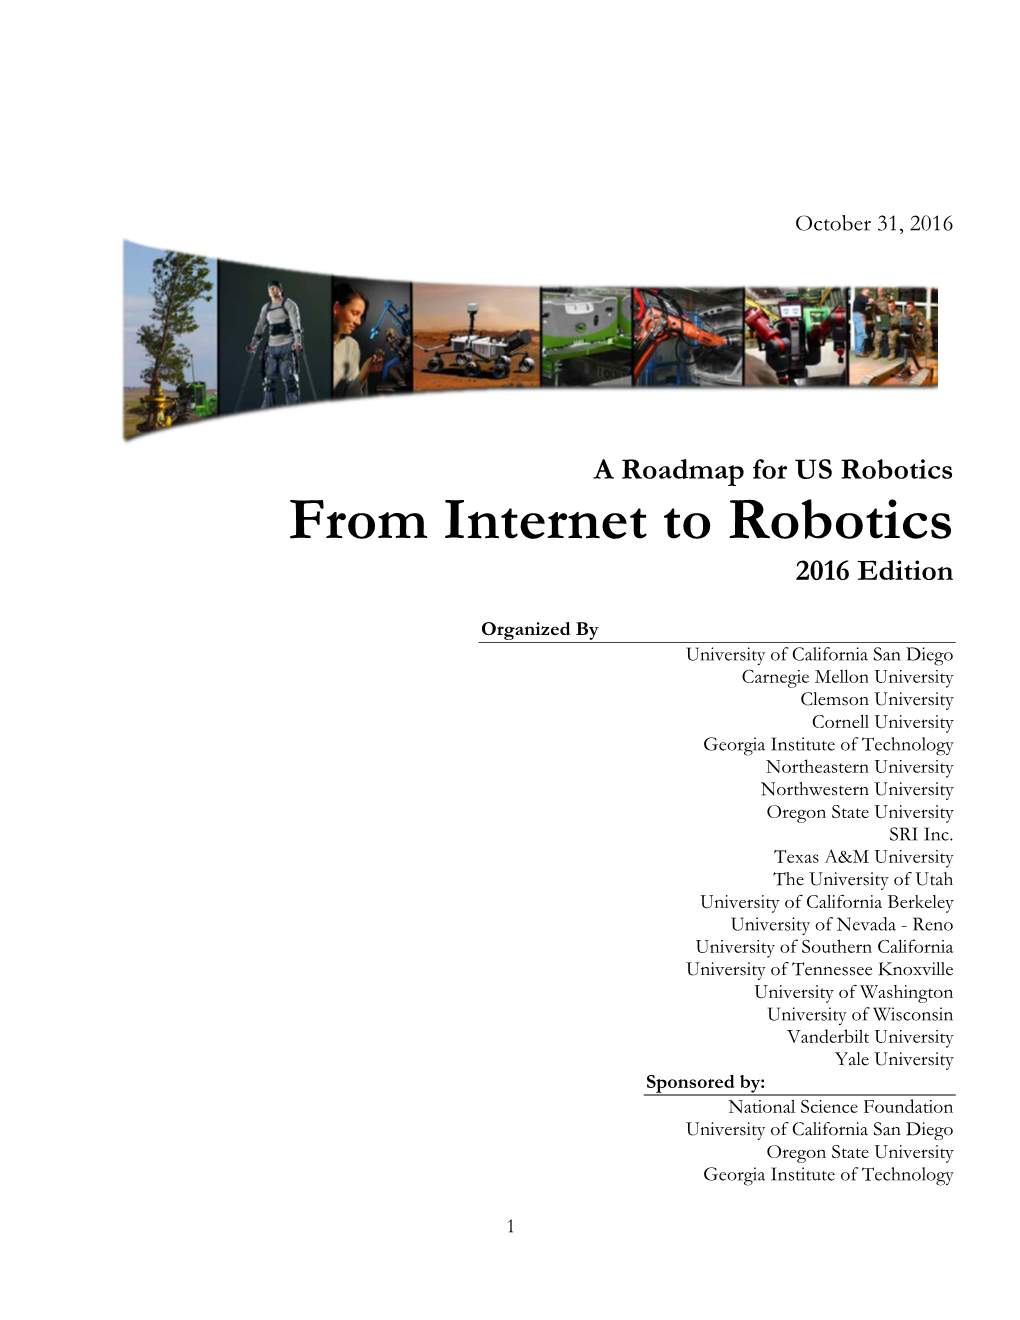 From Internet to Robotics 2016 Edition